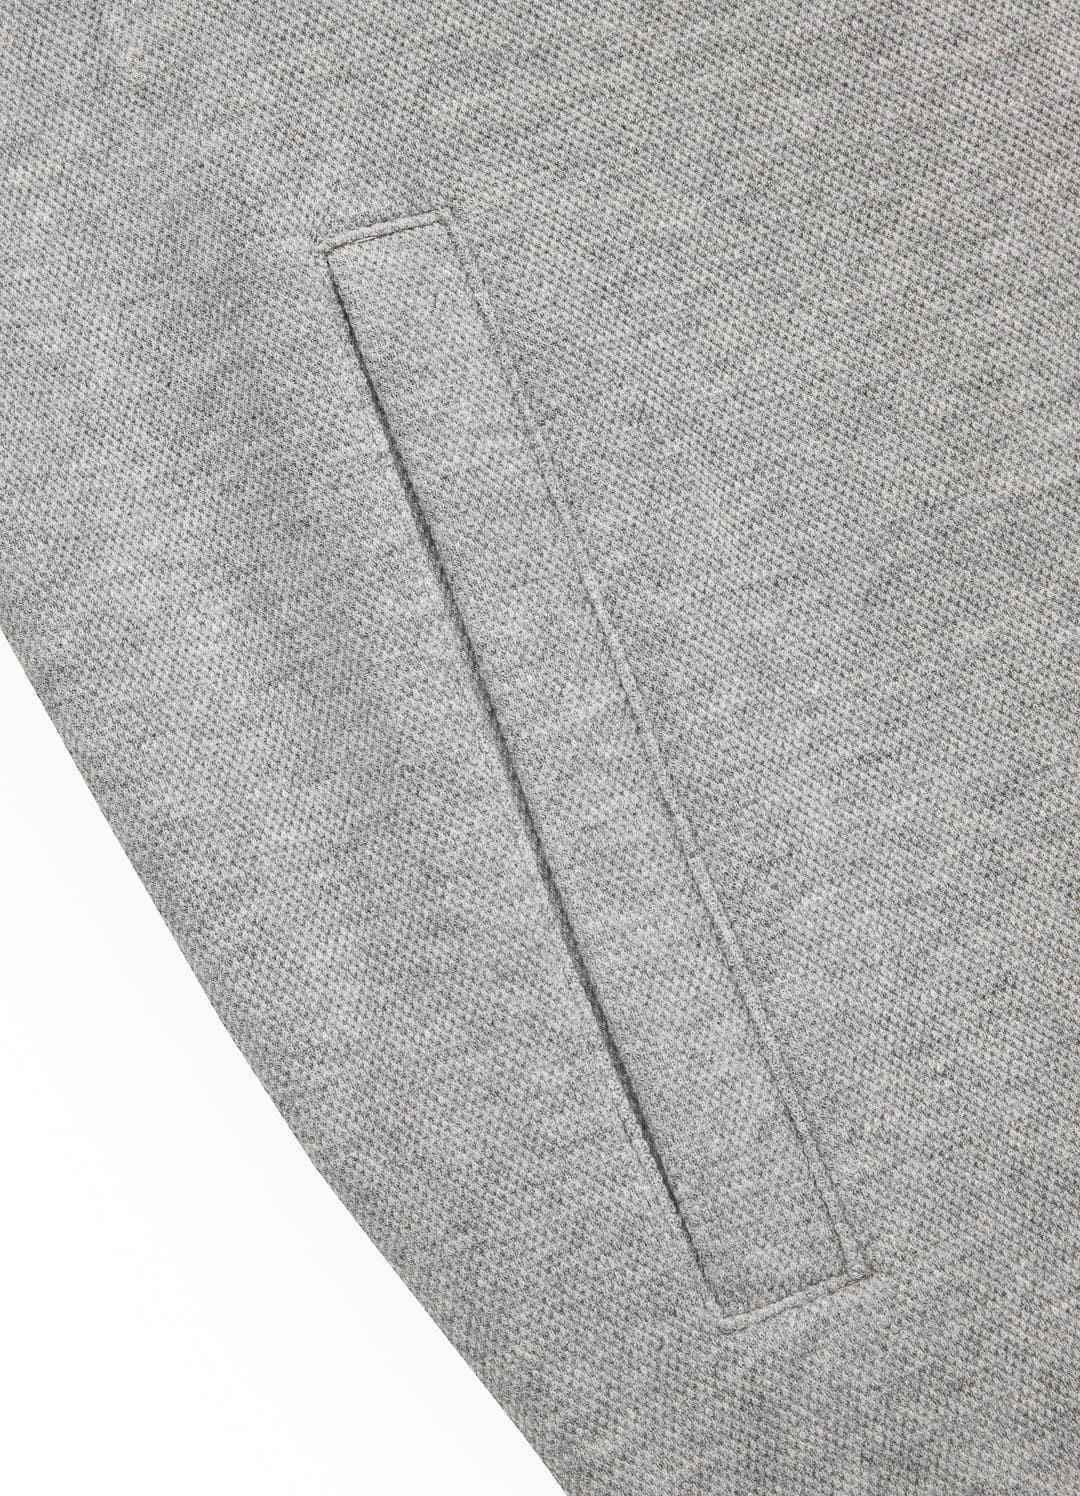 Bluza rozpinana z kapturem Premium Pique NEW LOGO Szara - Pitbull West Coast International Store 